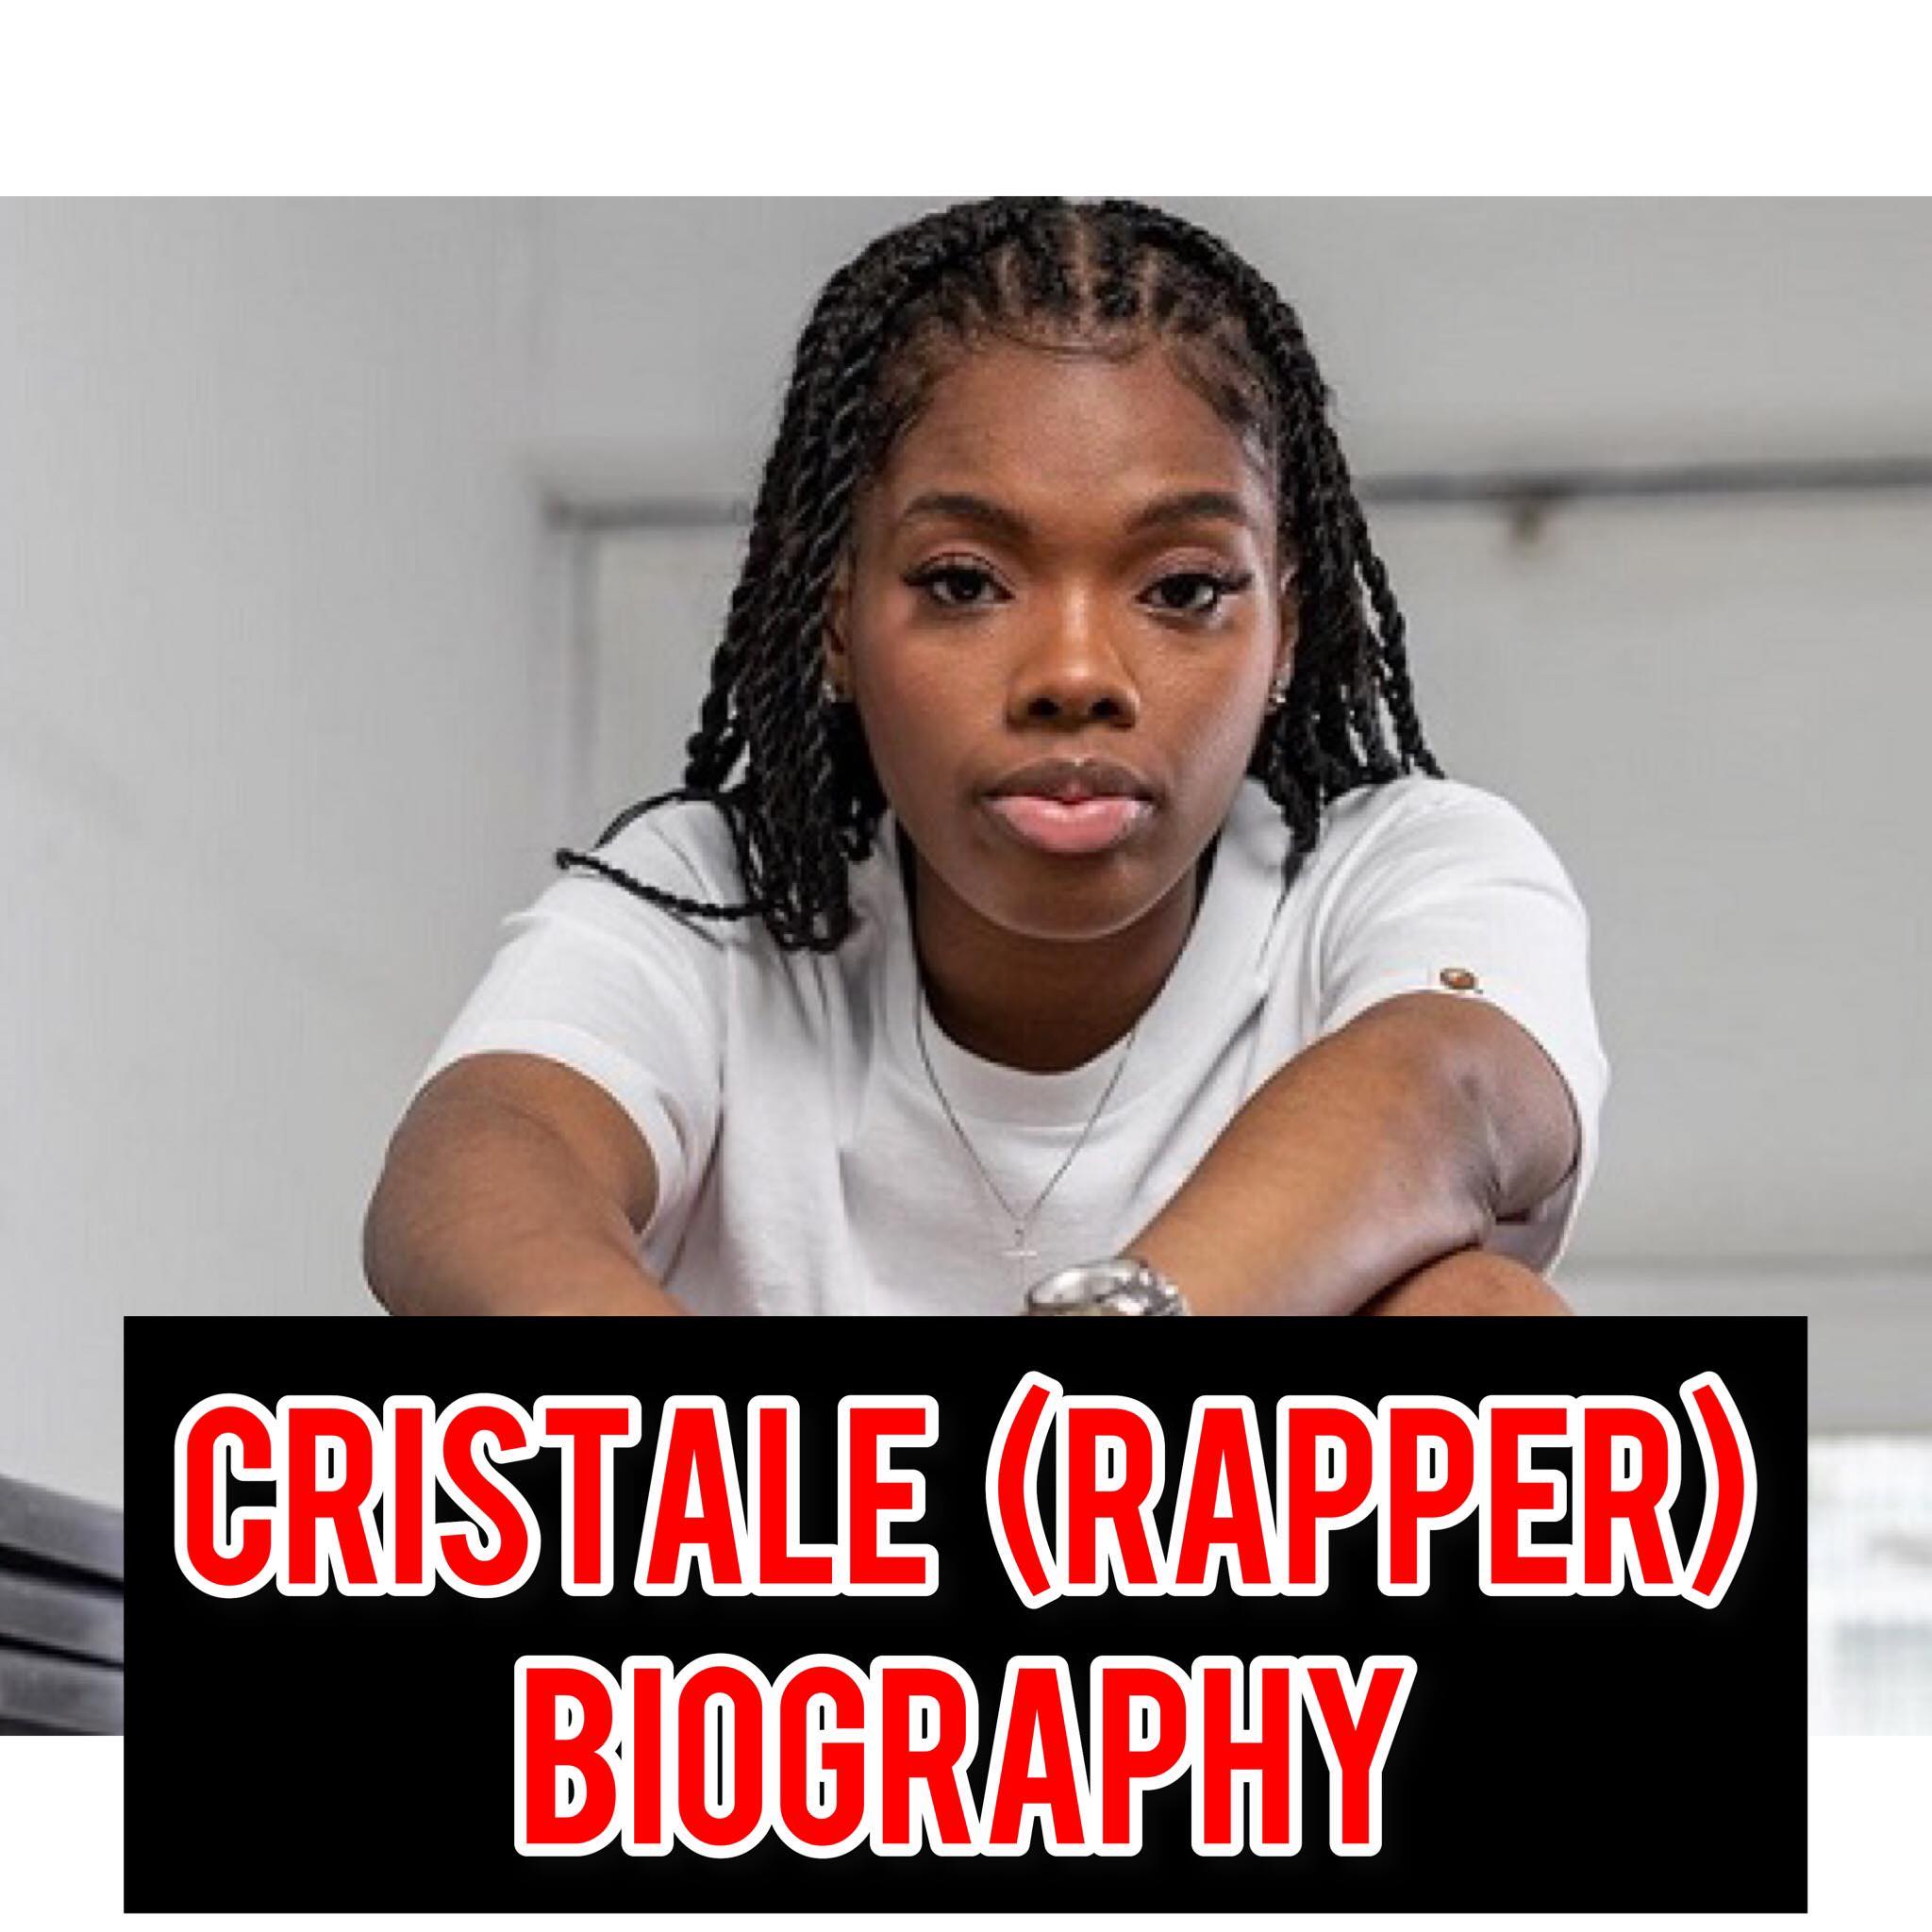 Cristale Biography